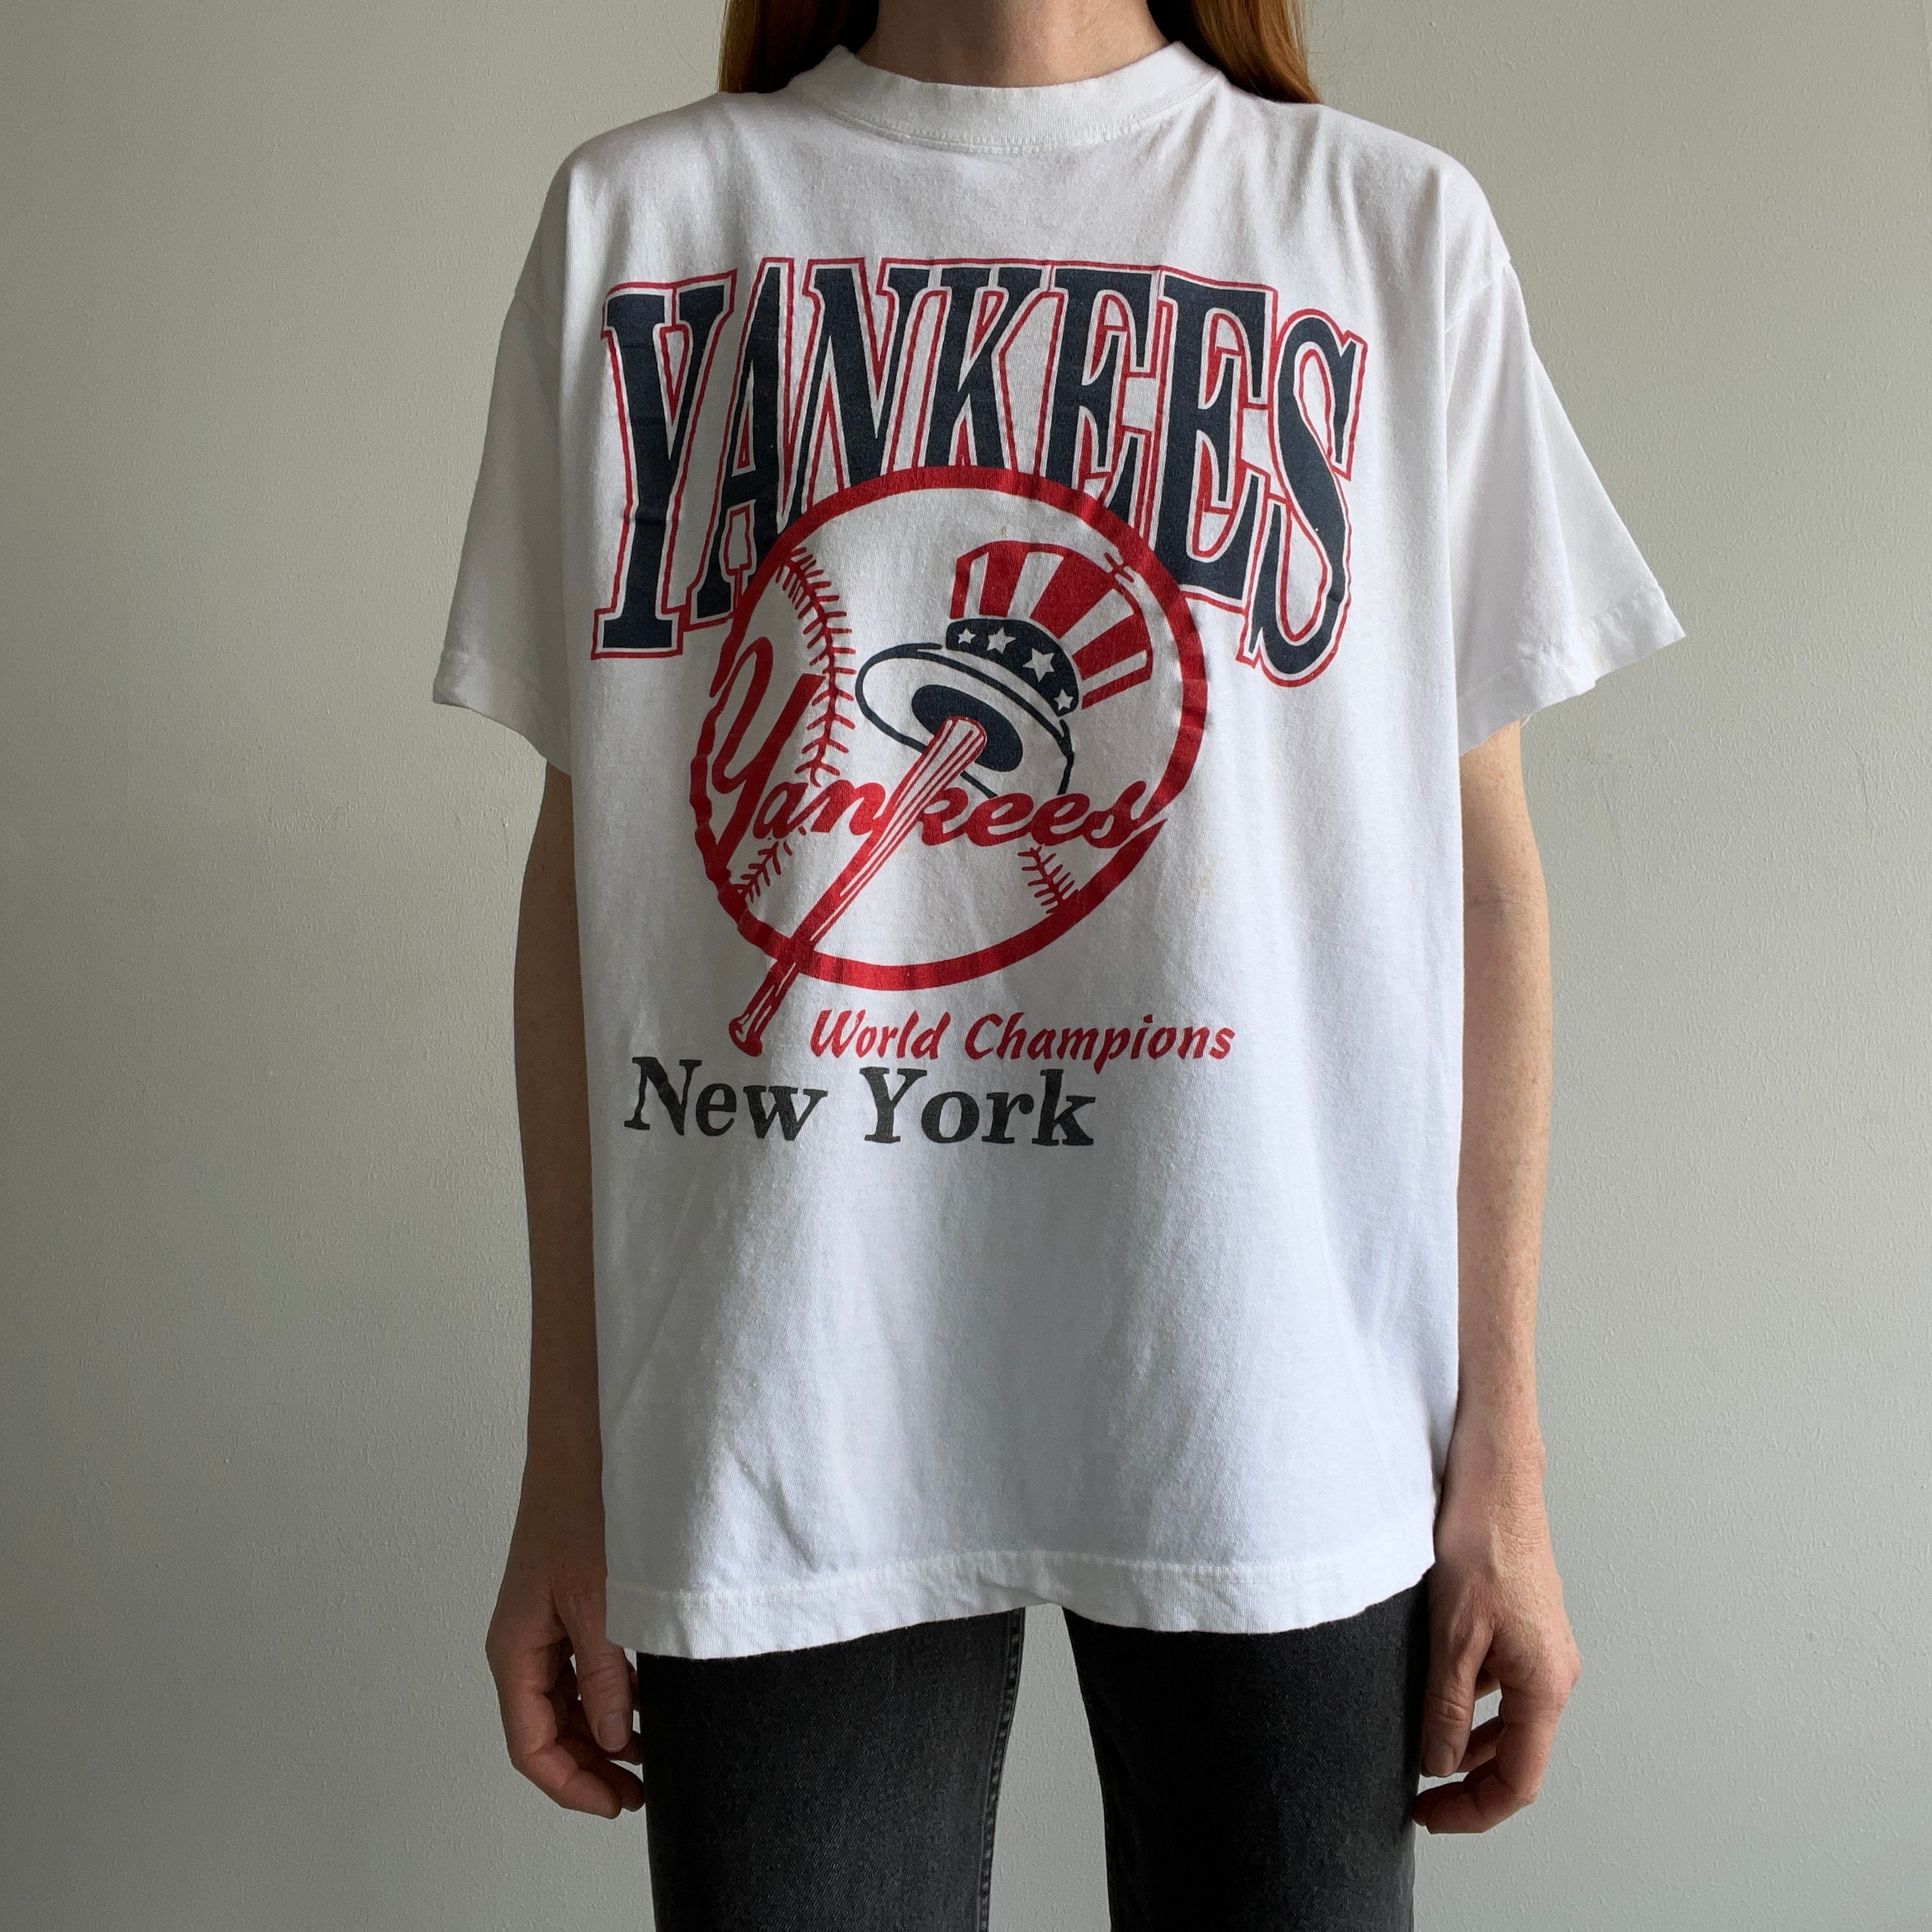 New York Yankees retro Bowling Shirt